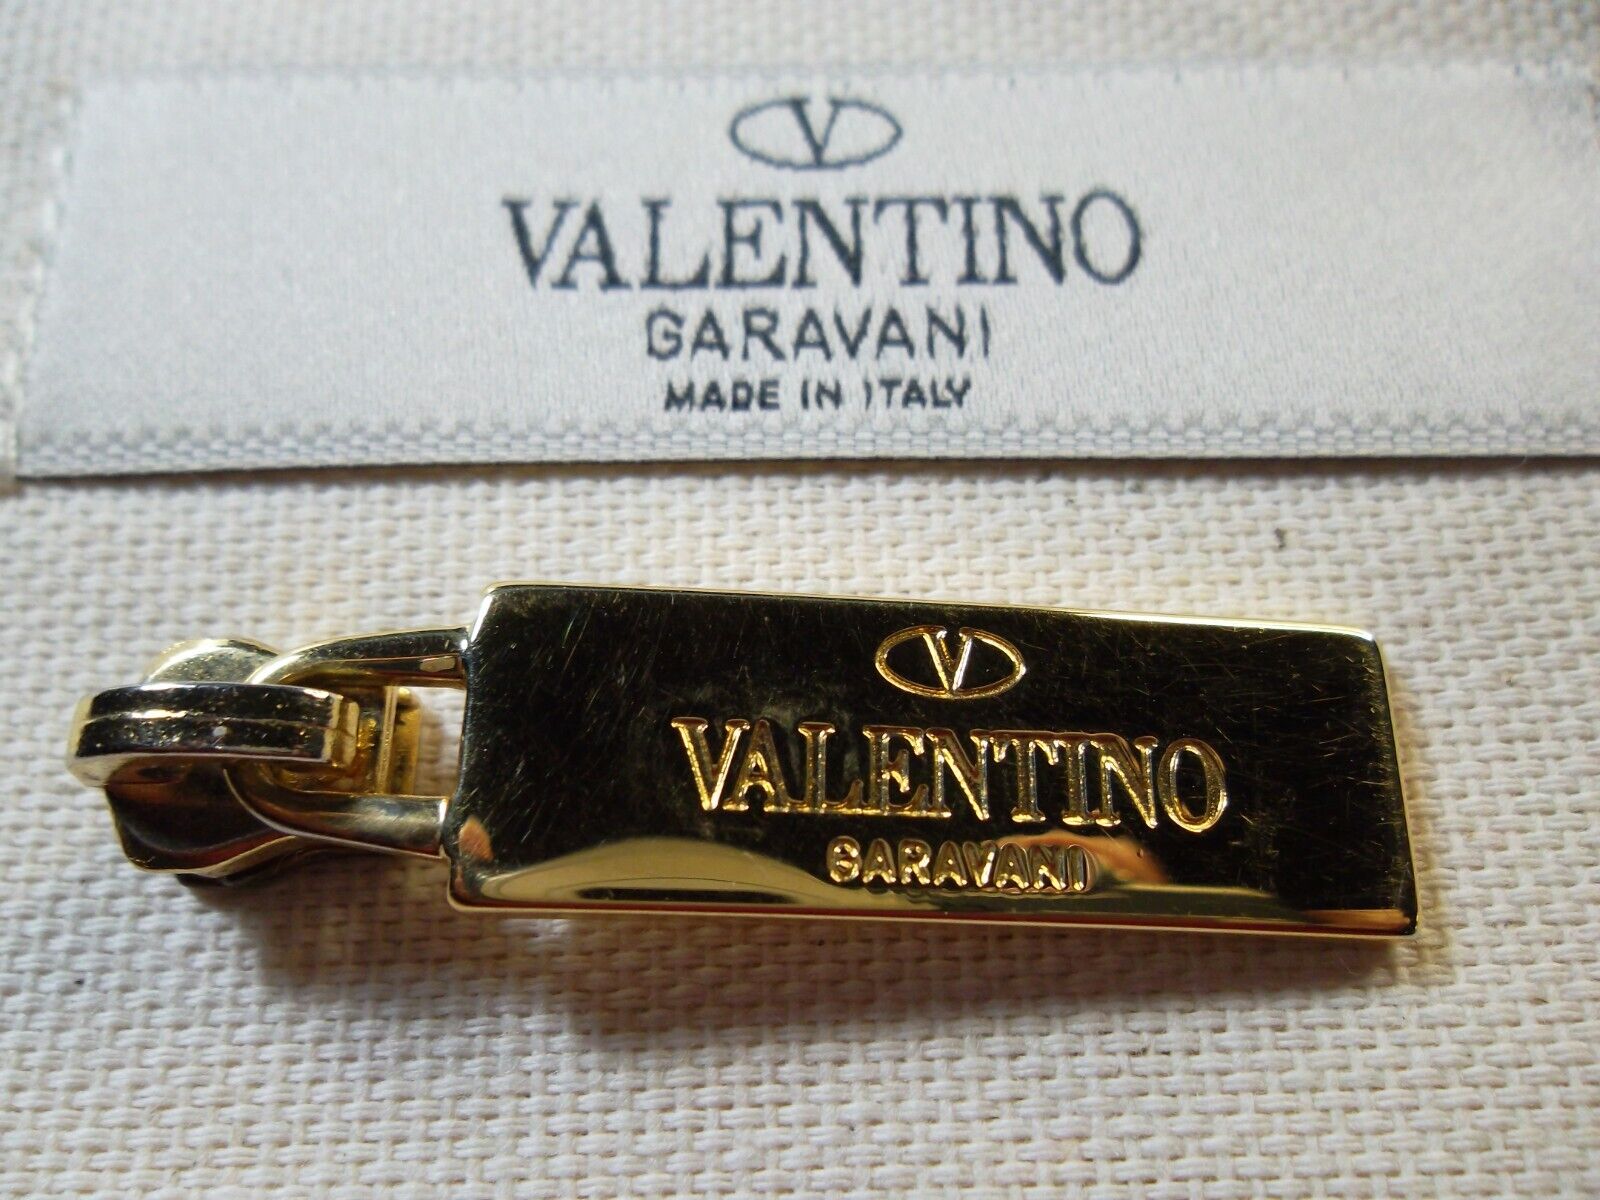 VALENTINO Garavani replacement handbag/wallet zipper pull gold tone  with slider